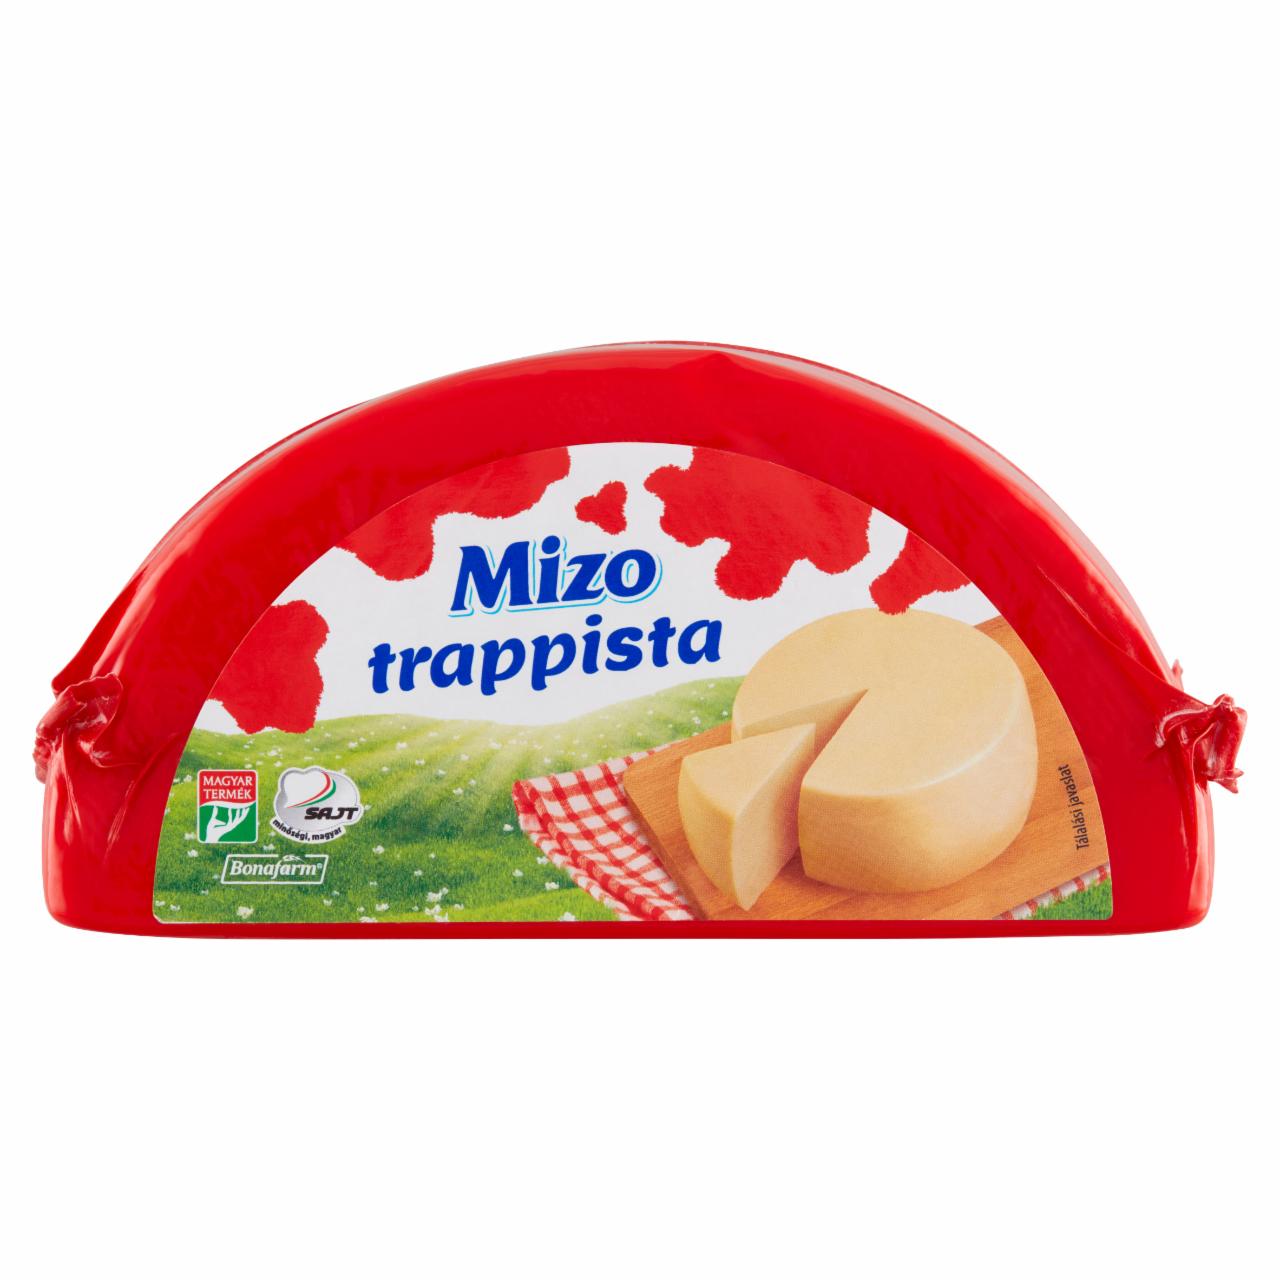 Képek - Mizo trappista sajt 700 g